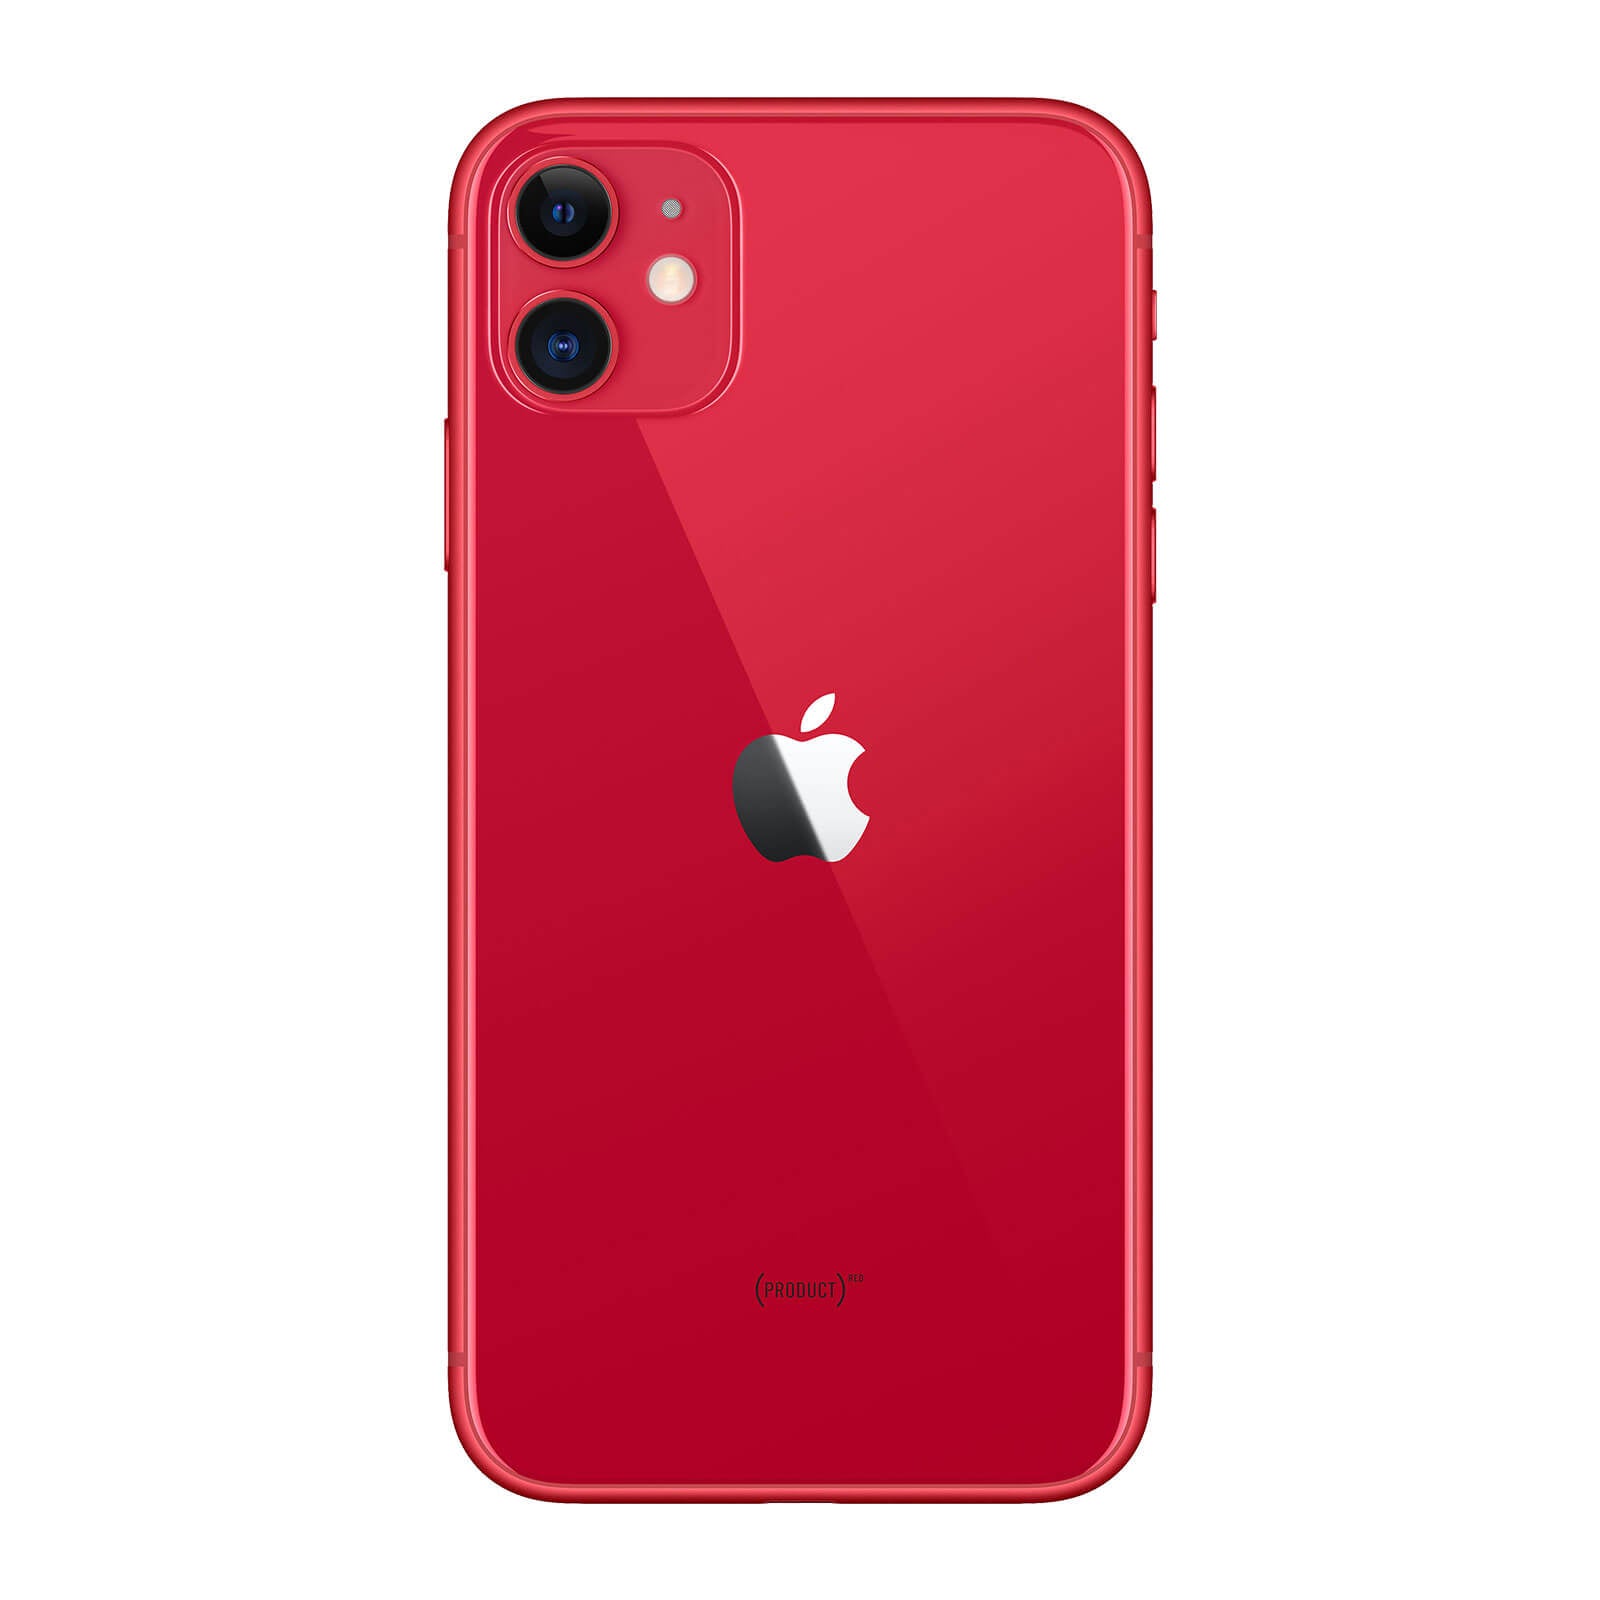 Apple iPhone 11 64GB Product Red Pristine - Verizon